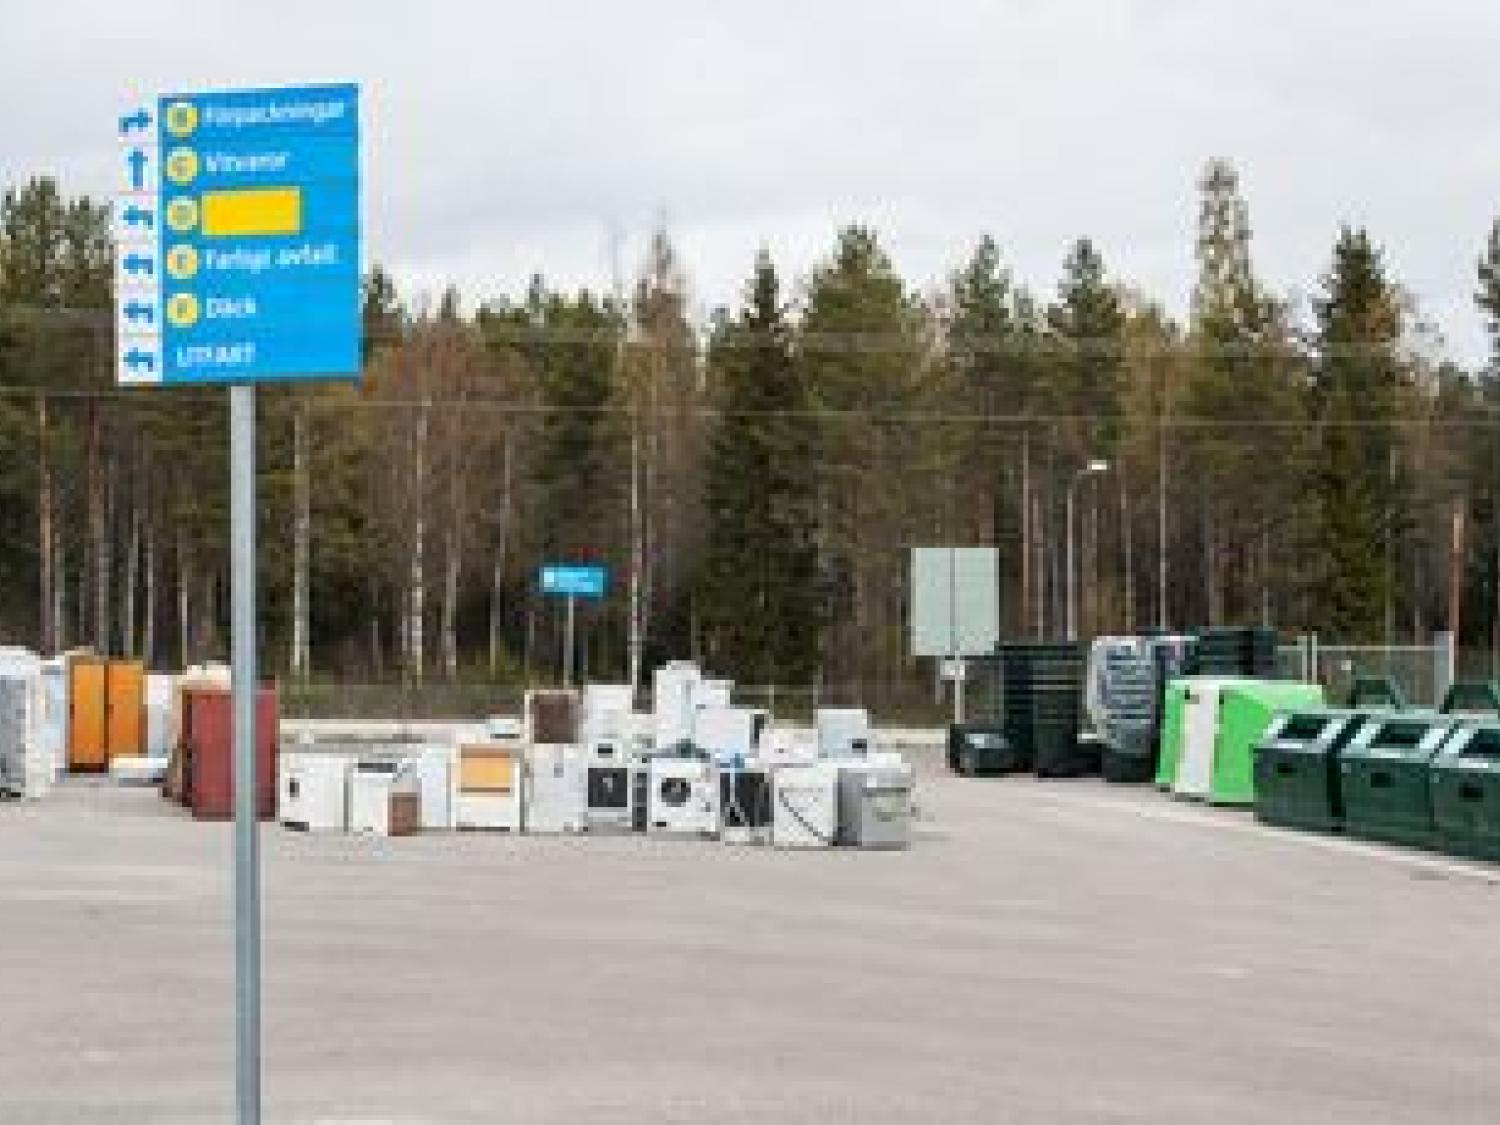 Homons Återvinningscentral, Jättendal, Nordanstigs Kommun